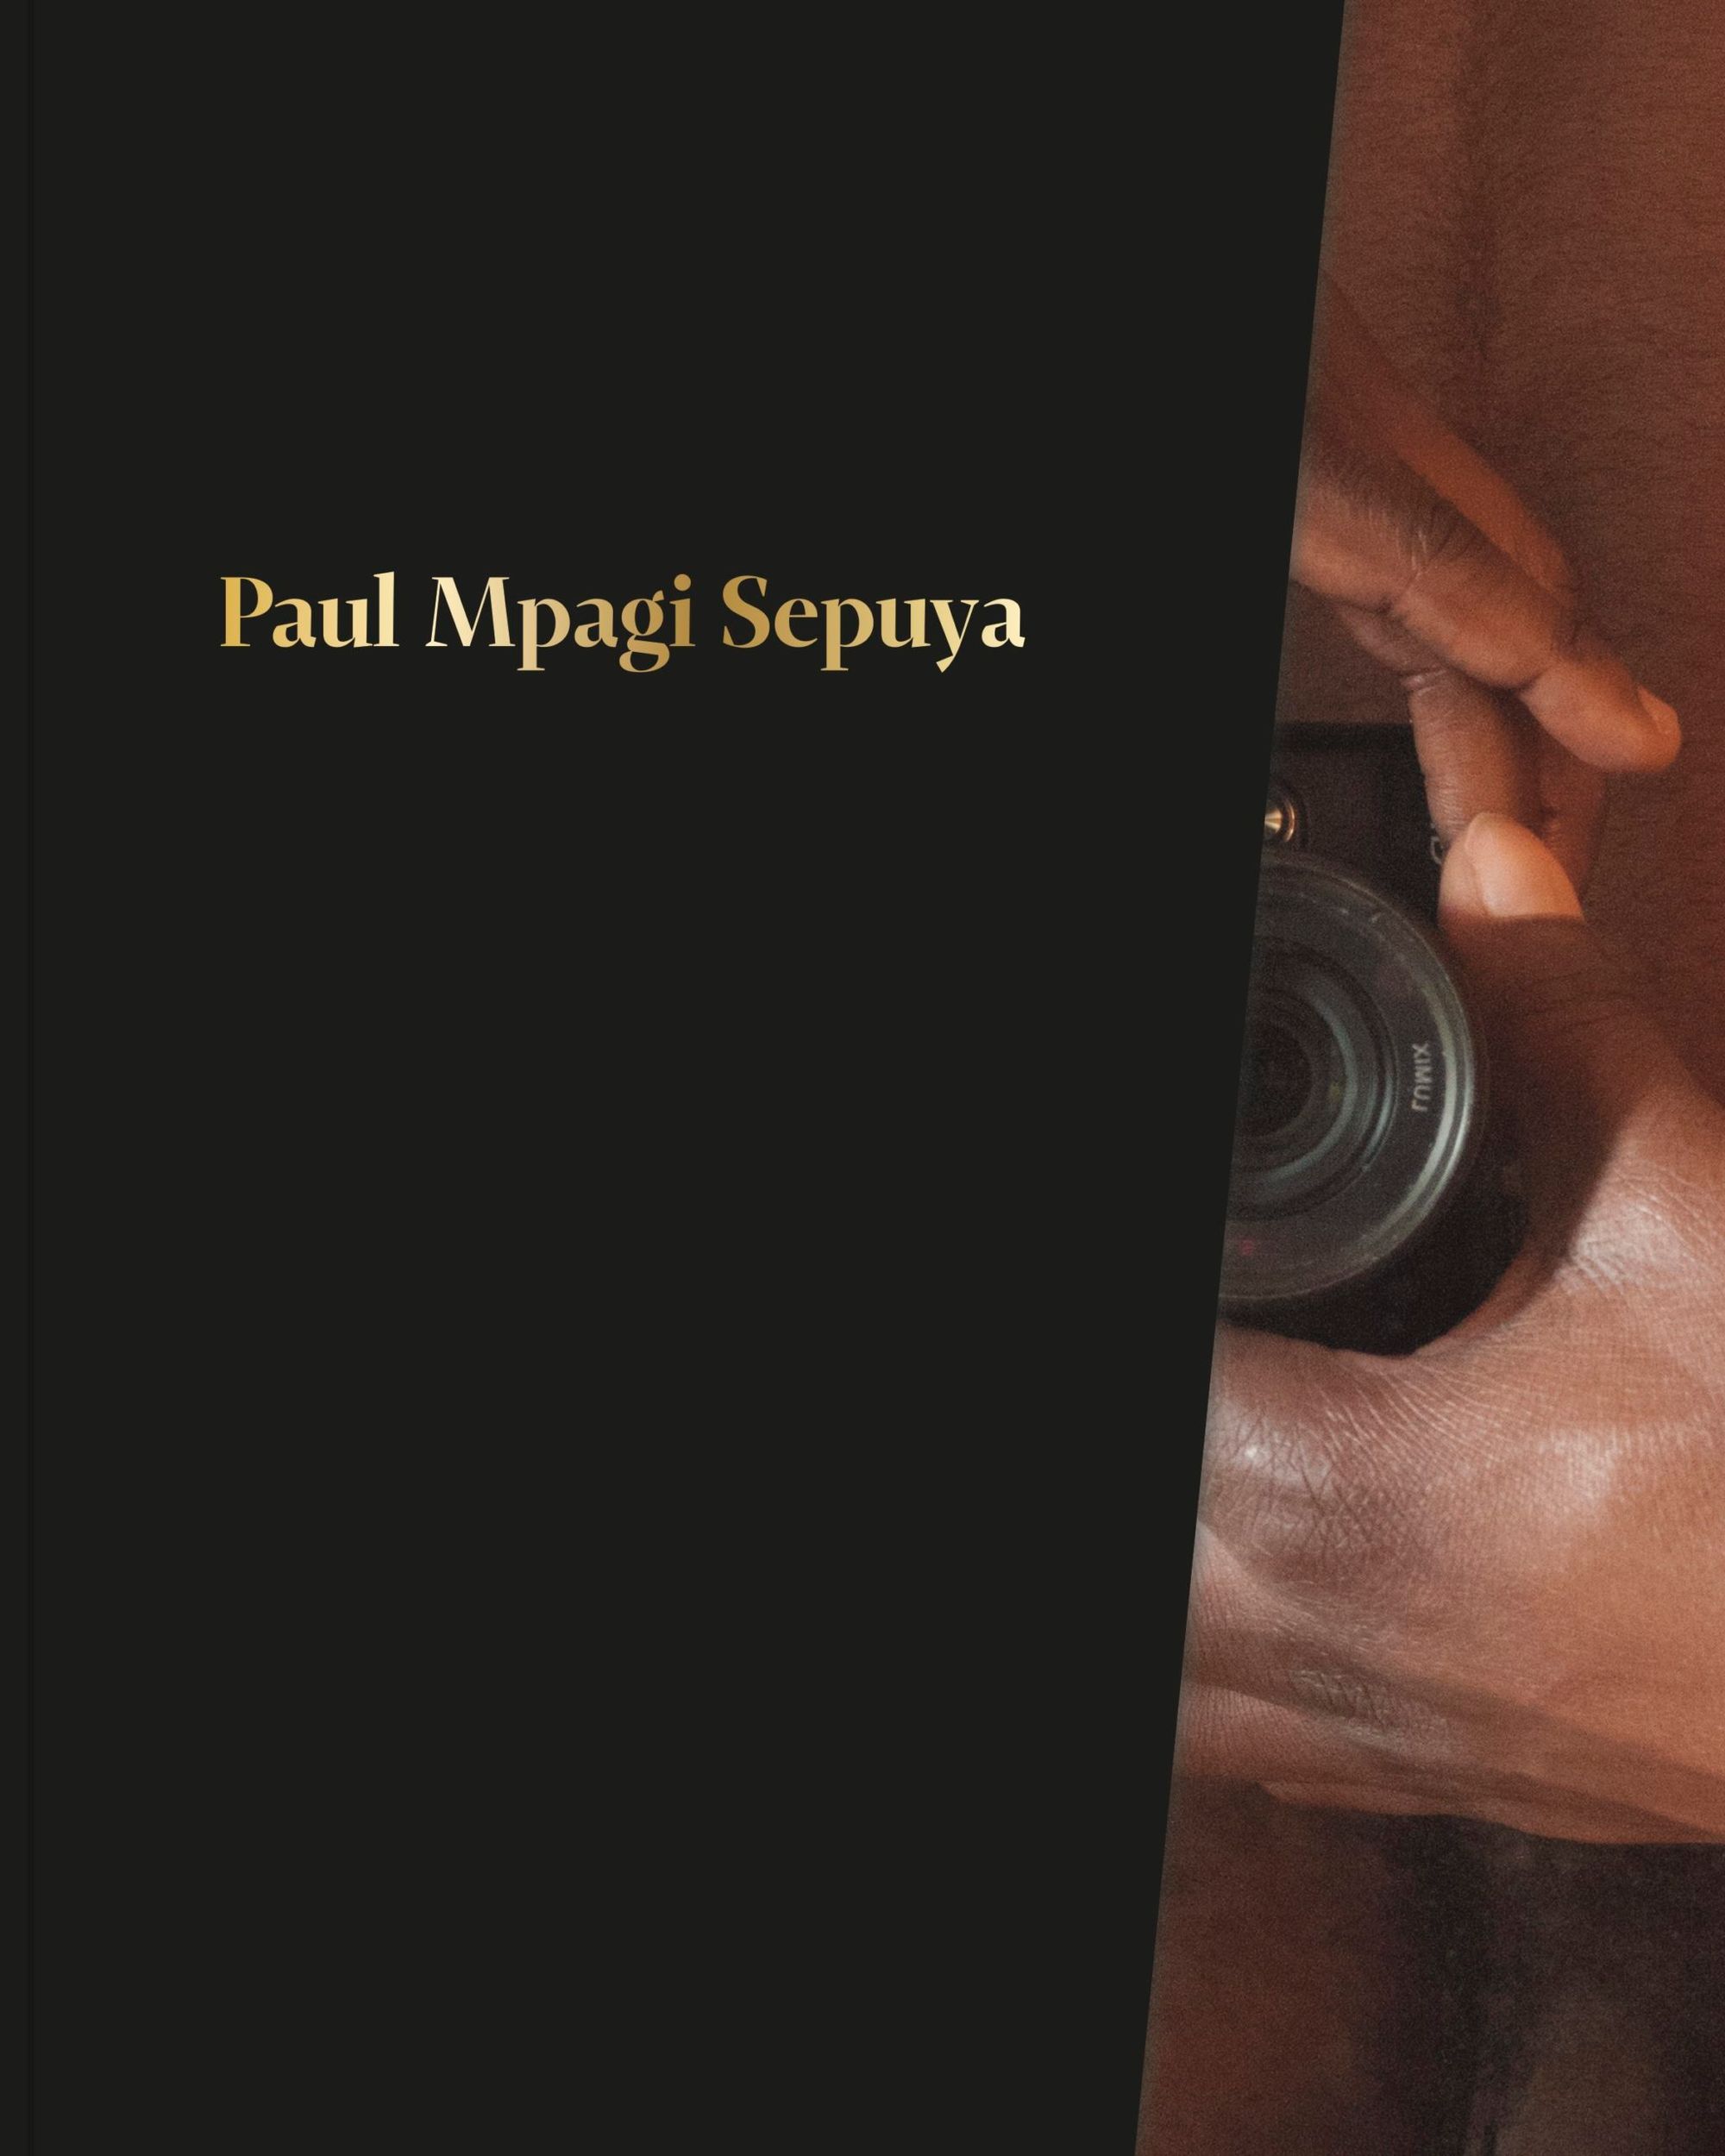 Detail view of Paul Mpagi Sepuya against a plain gray background